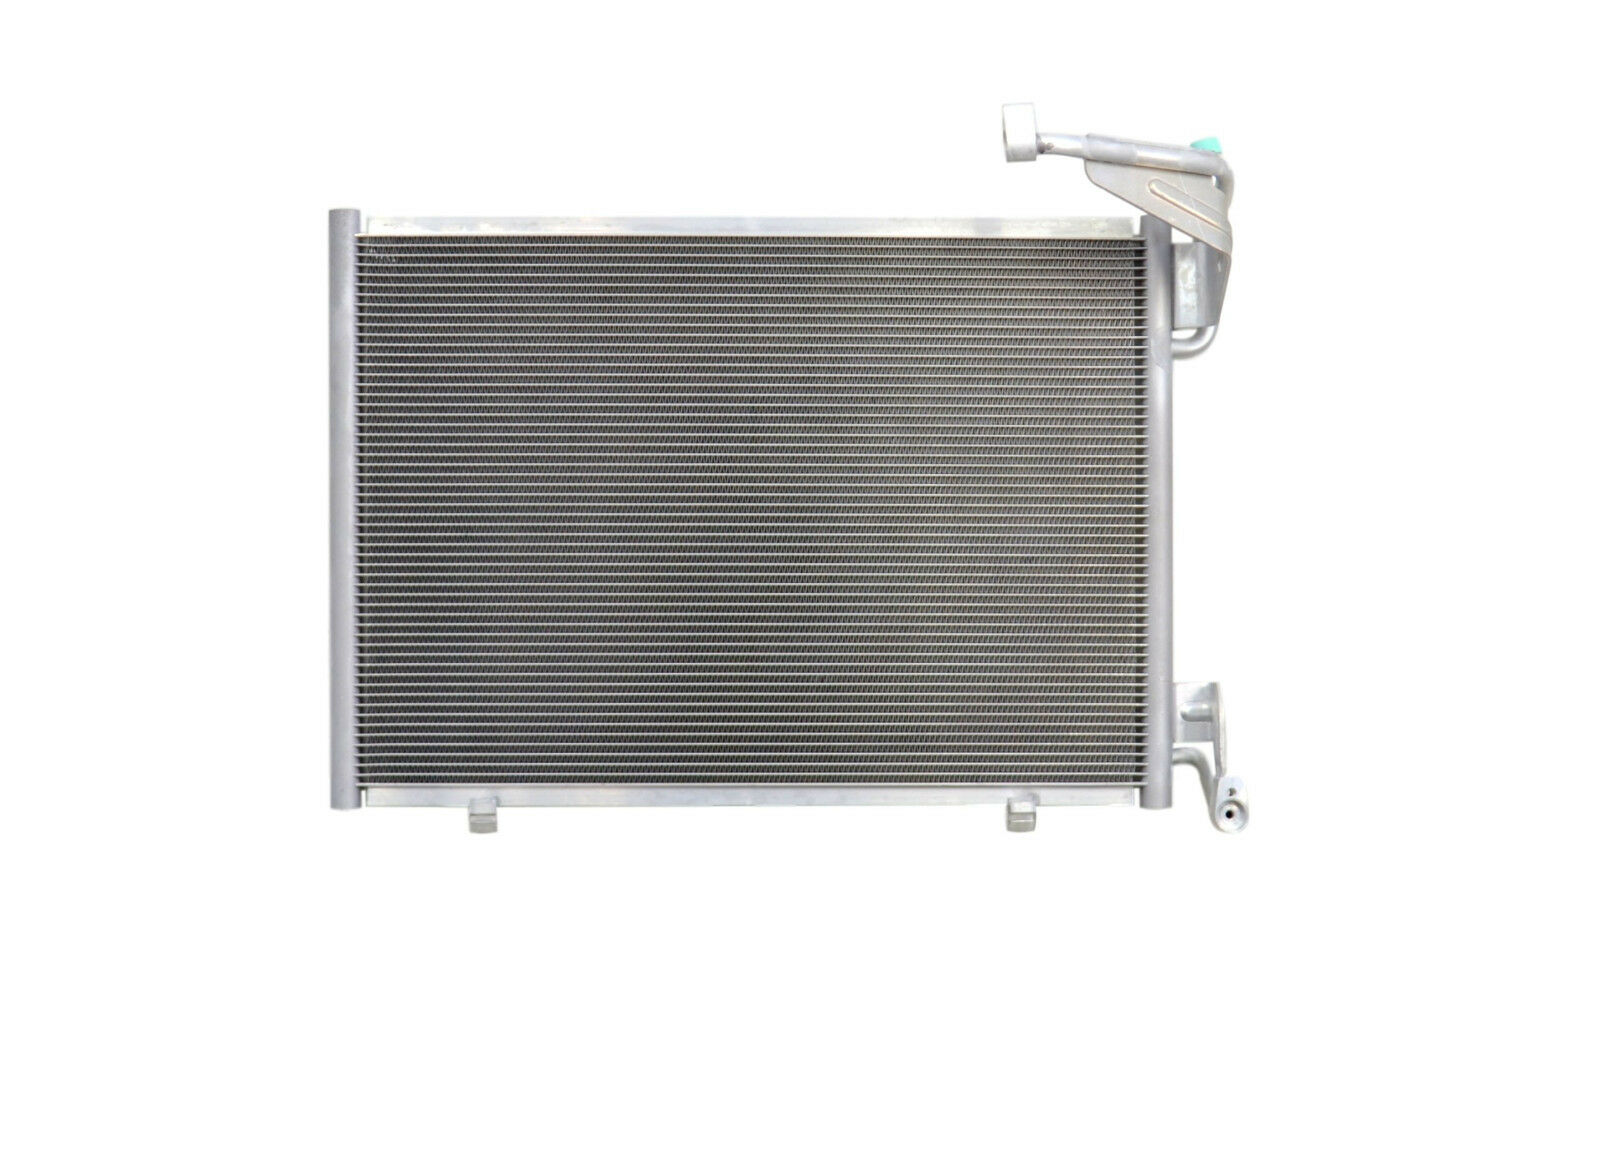 Condensator climatizare OEM/OES Ford B-MAX, 03.2013-02.2016, motor 1.0 Ecoboost, 74kw/88kw/92 kw benzina, cutie manuala, full aluminiu brazat, 543 (510)x383 (350)x16 mm, fara filtru uscator